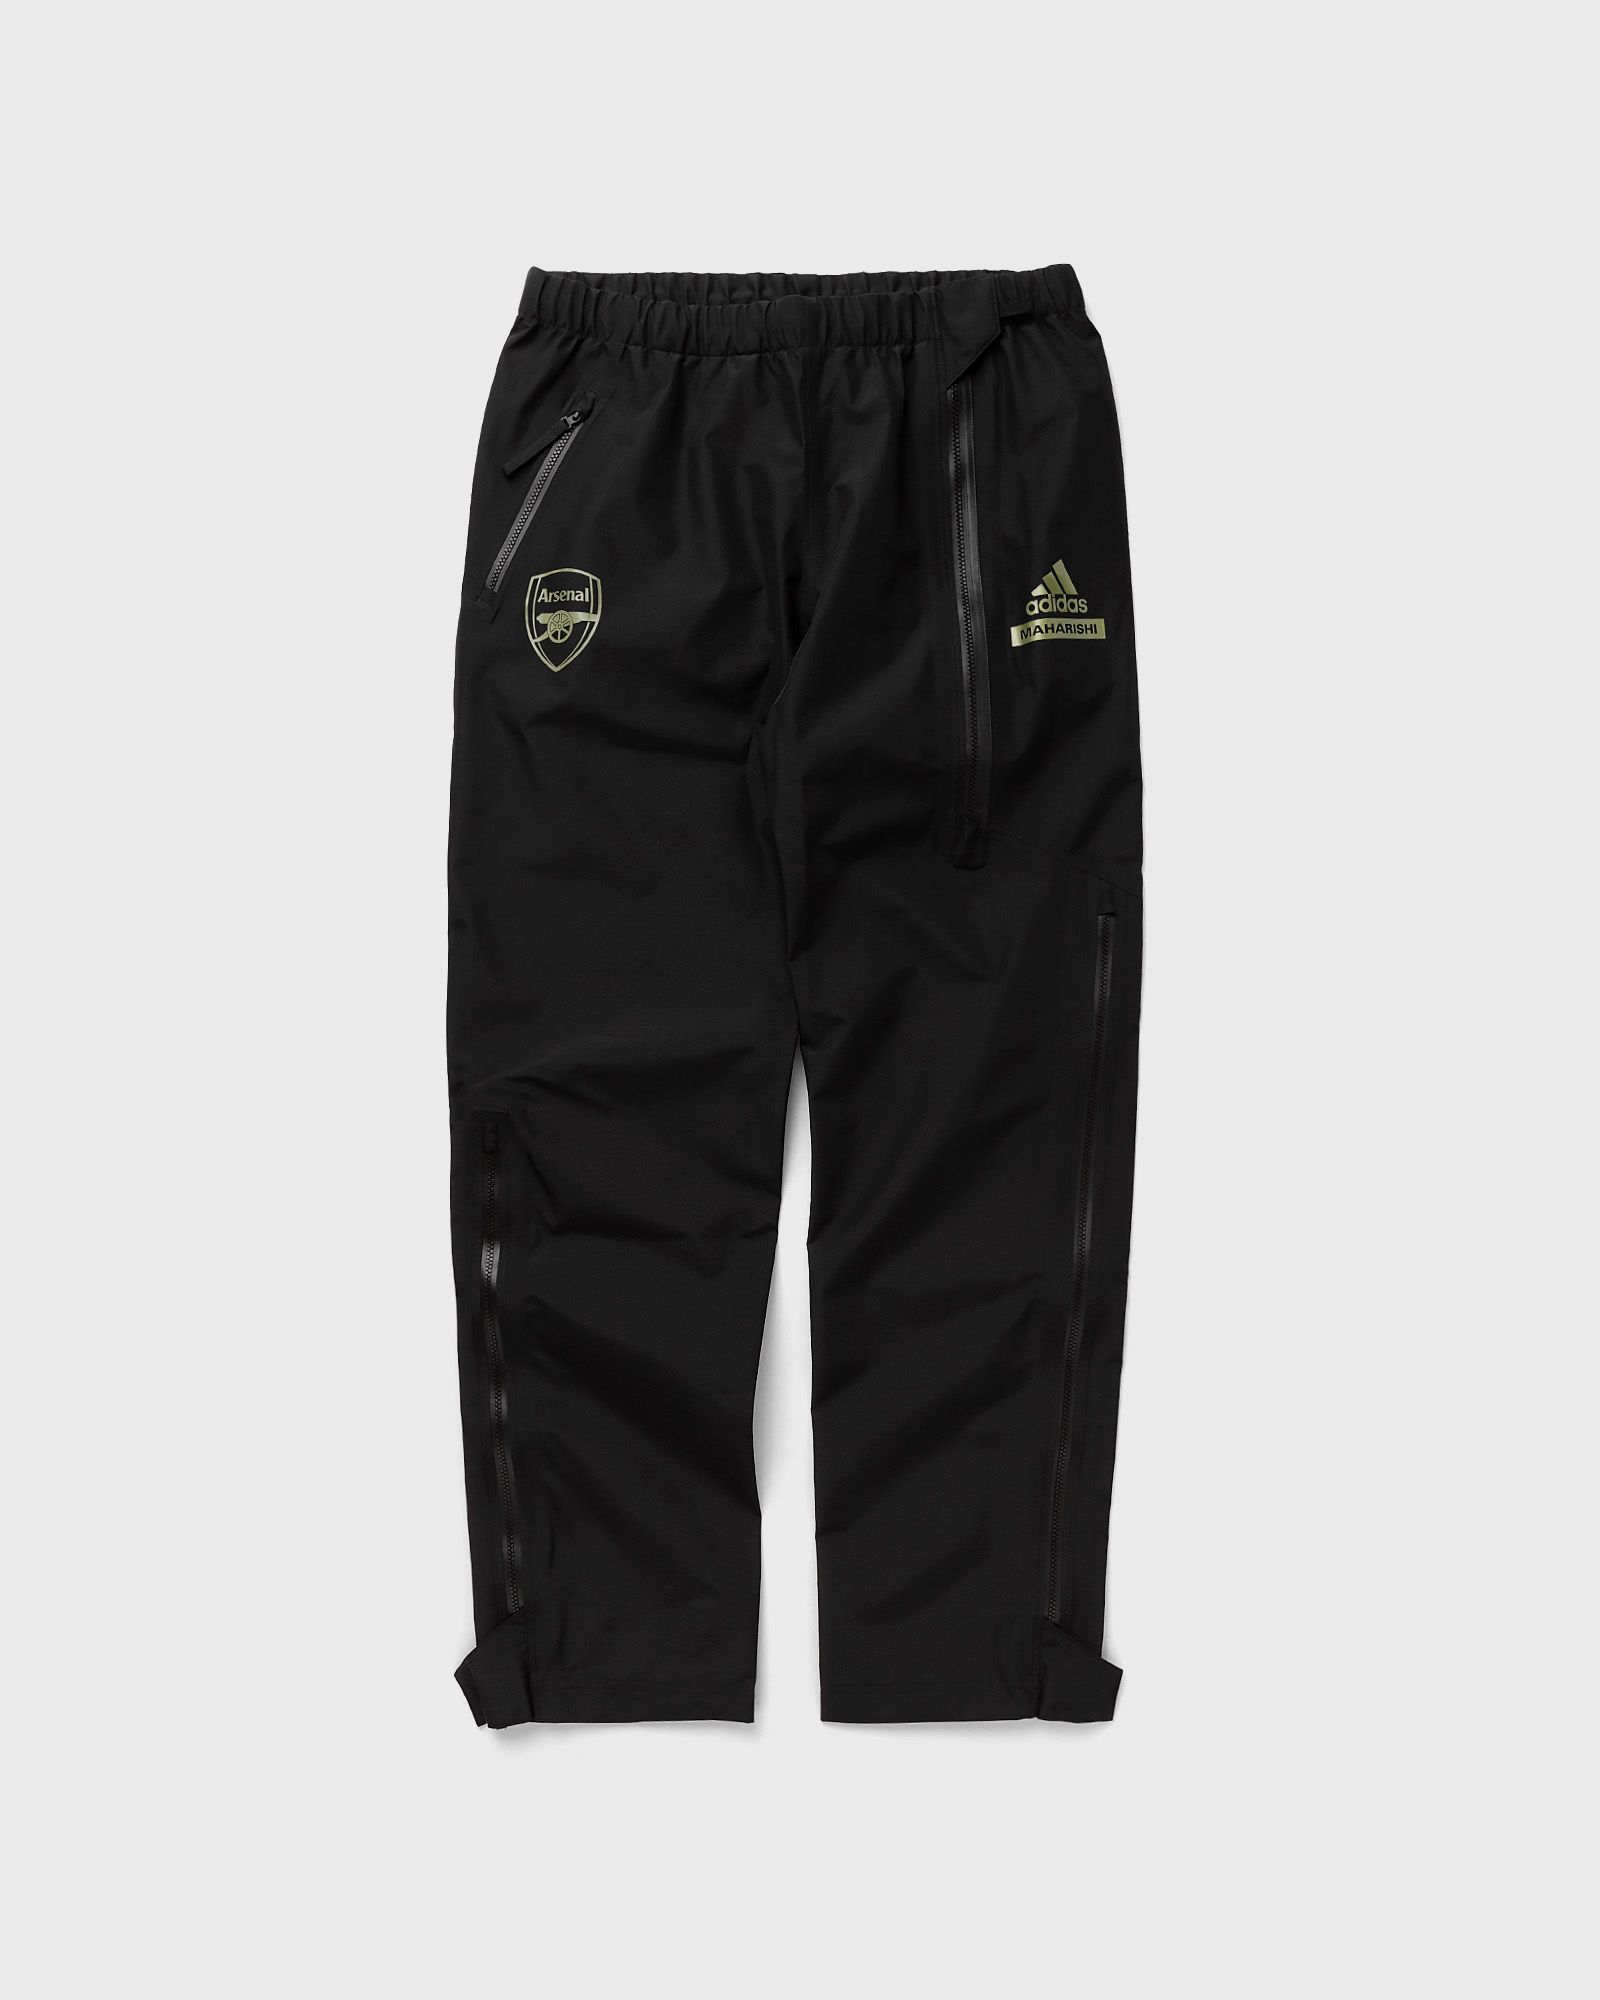 Adidas - arsenal x maharishi gore-tex paclite pants men casual pants black in größe:l